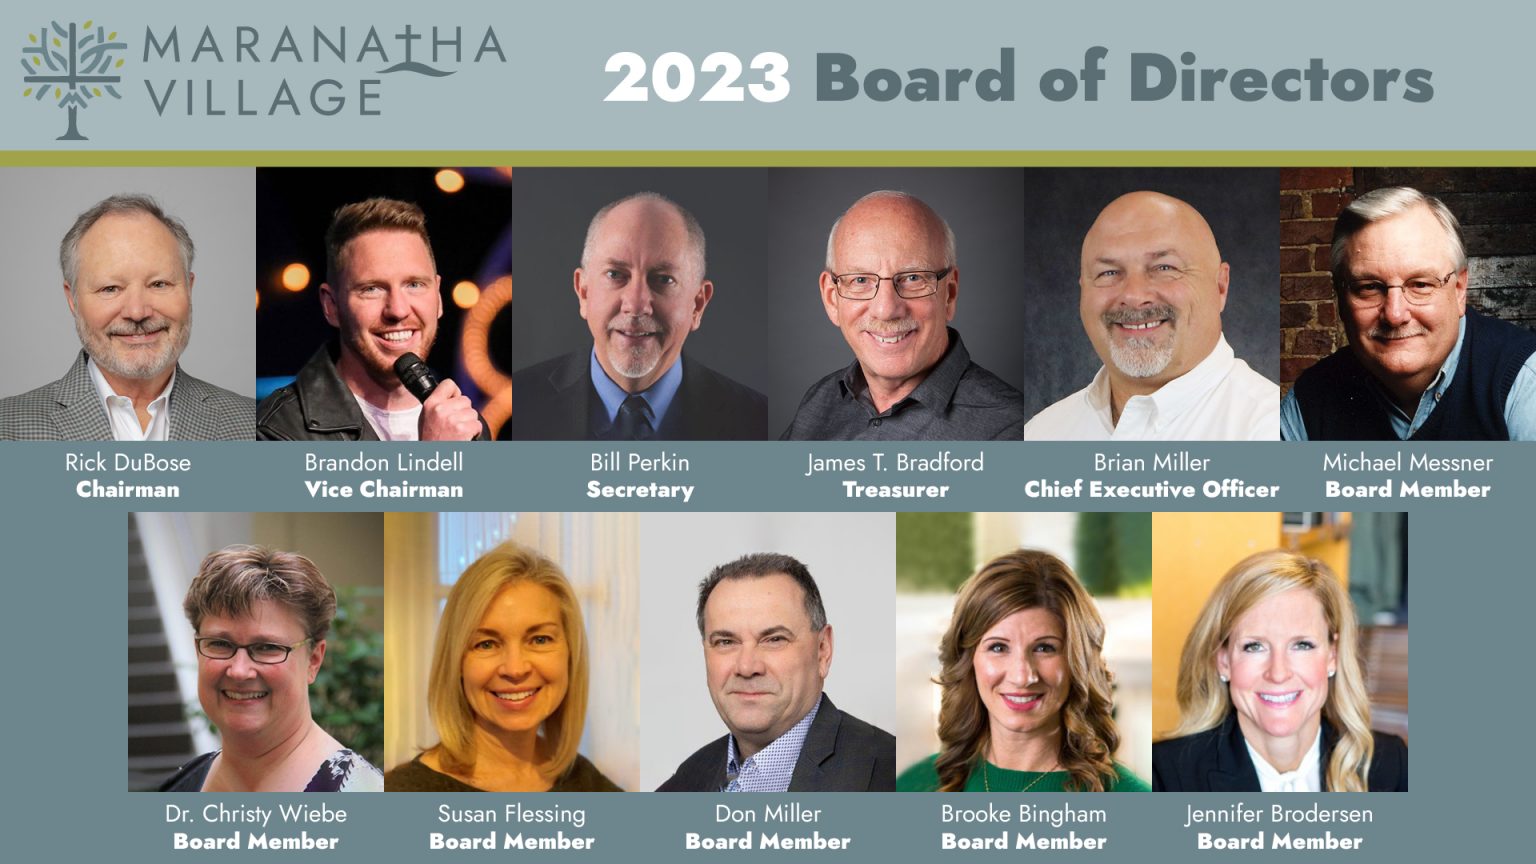 Maranatha Village's 2023 Board of Directors